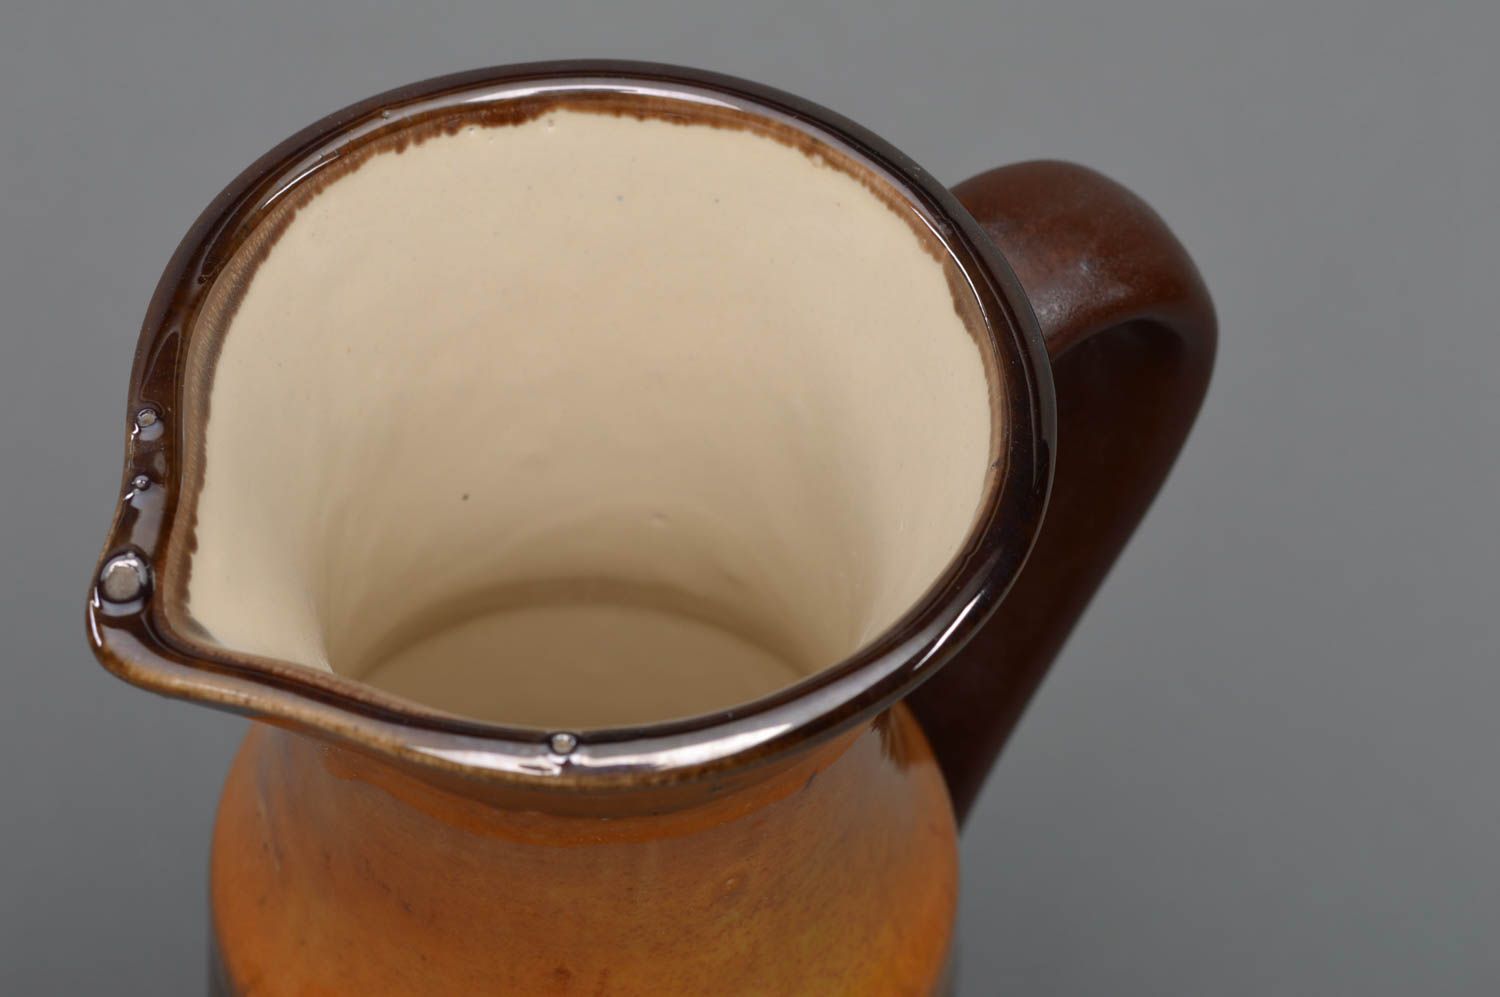 Handmade ceramic coffee jug with handle 2,17 lb photo 3